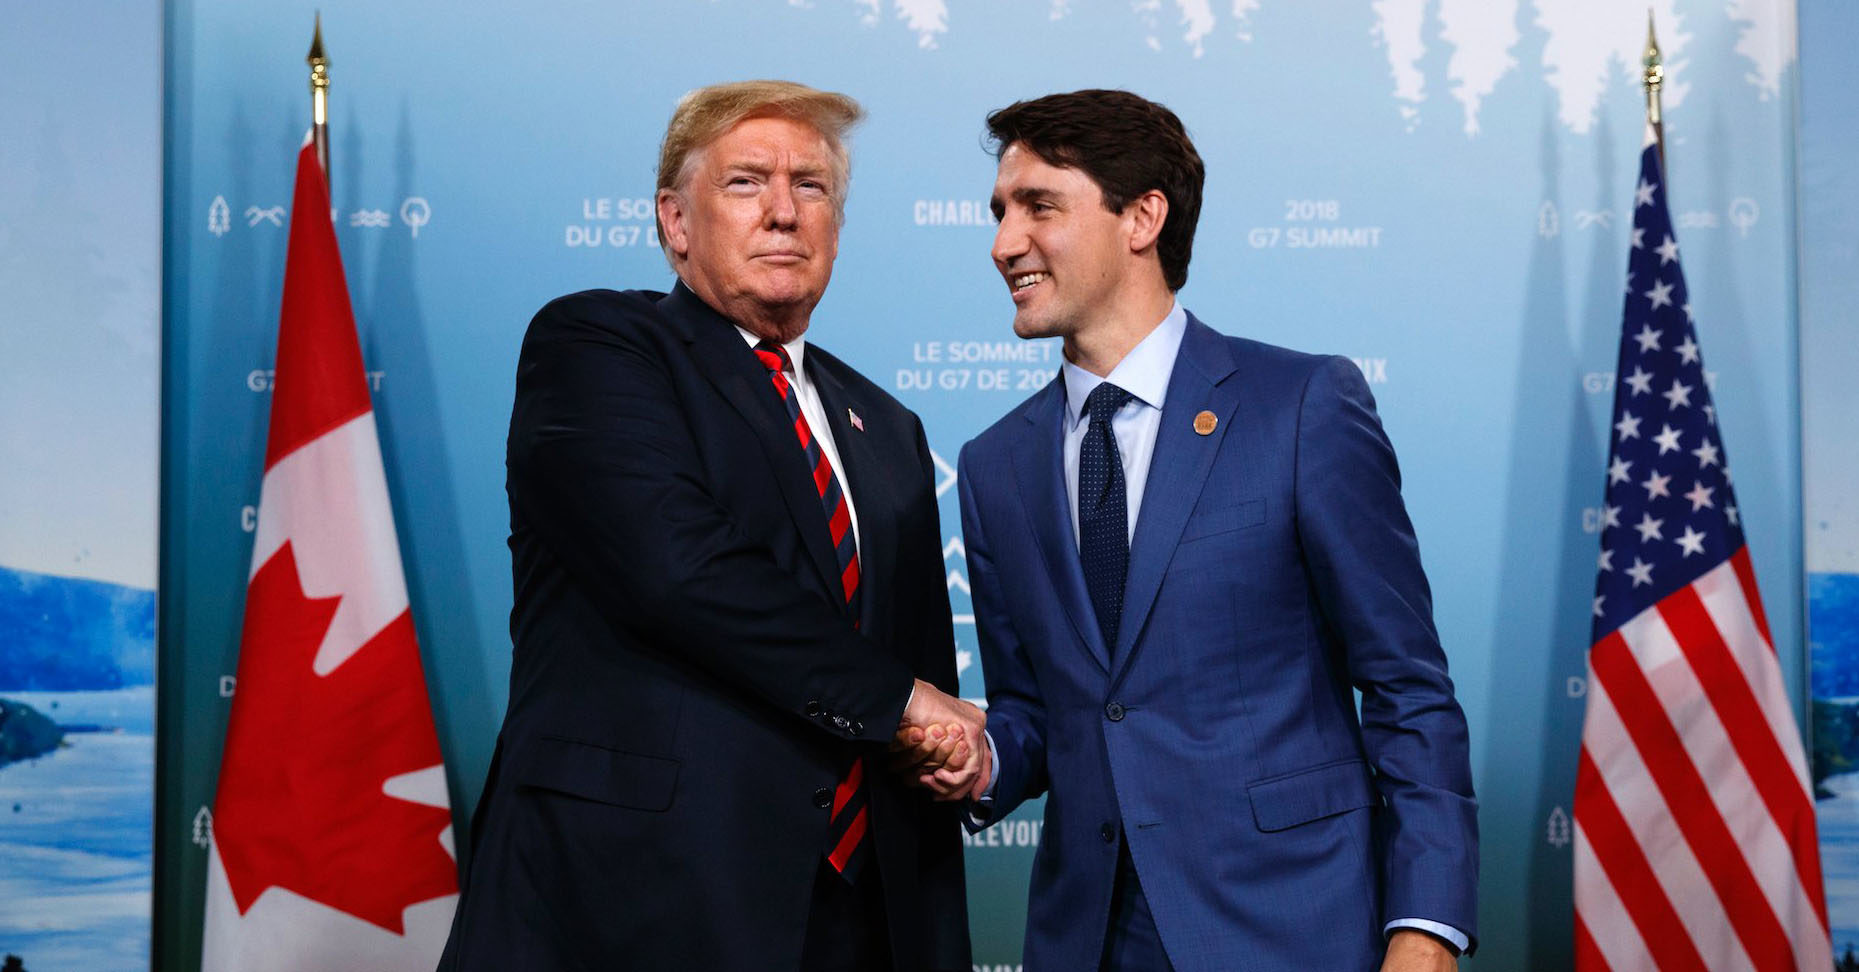 Trump Trudeau handshake